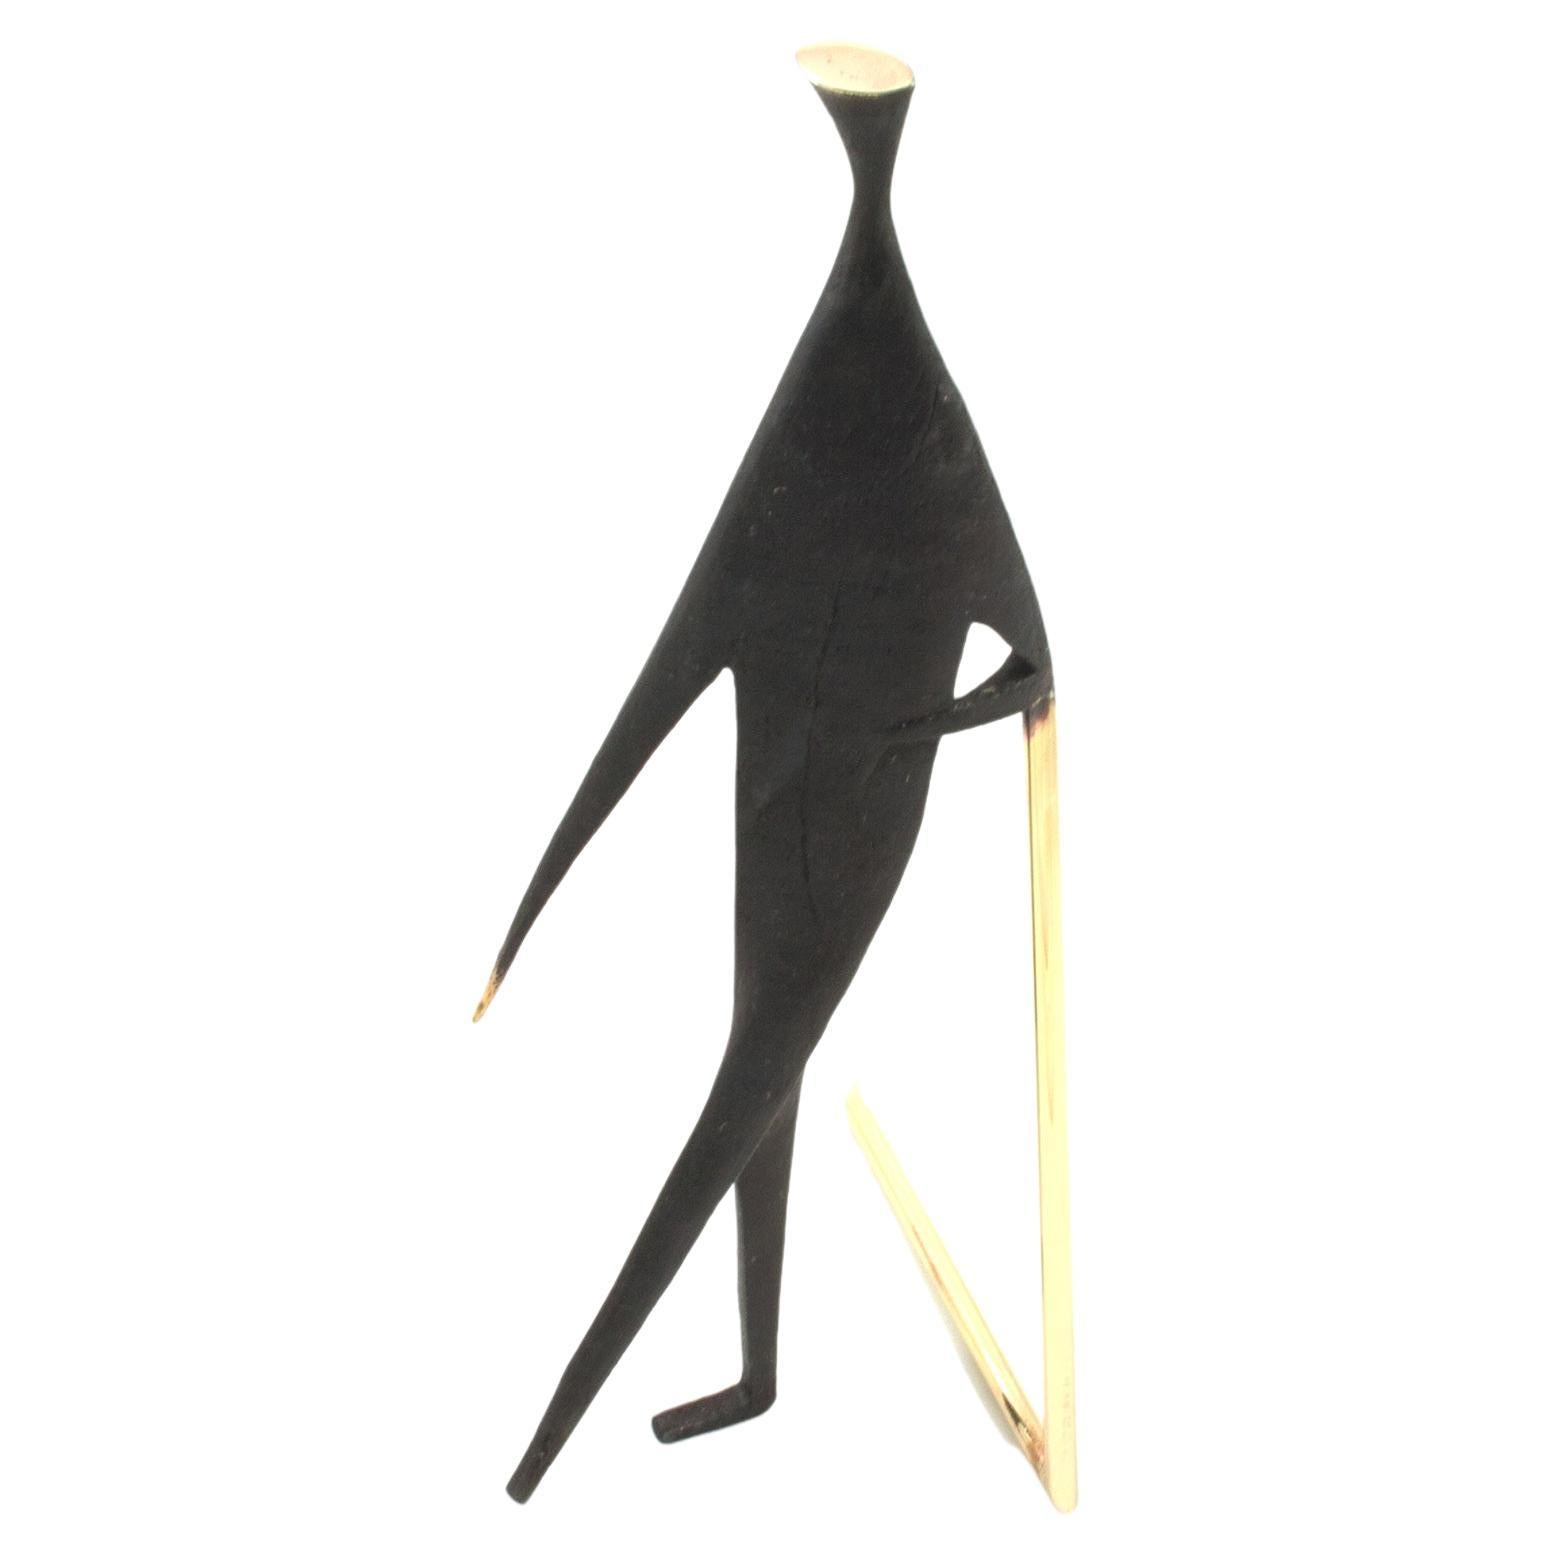 Carl Auböck Sculpture "Man with Stick" #4060 For Sale